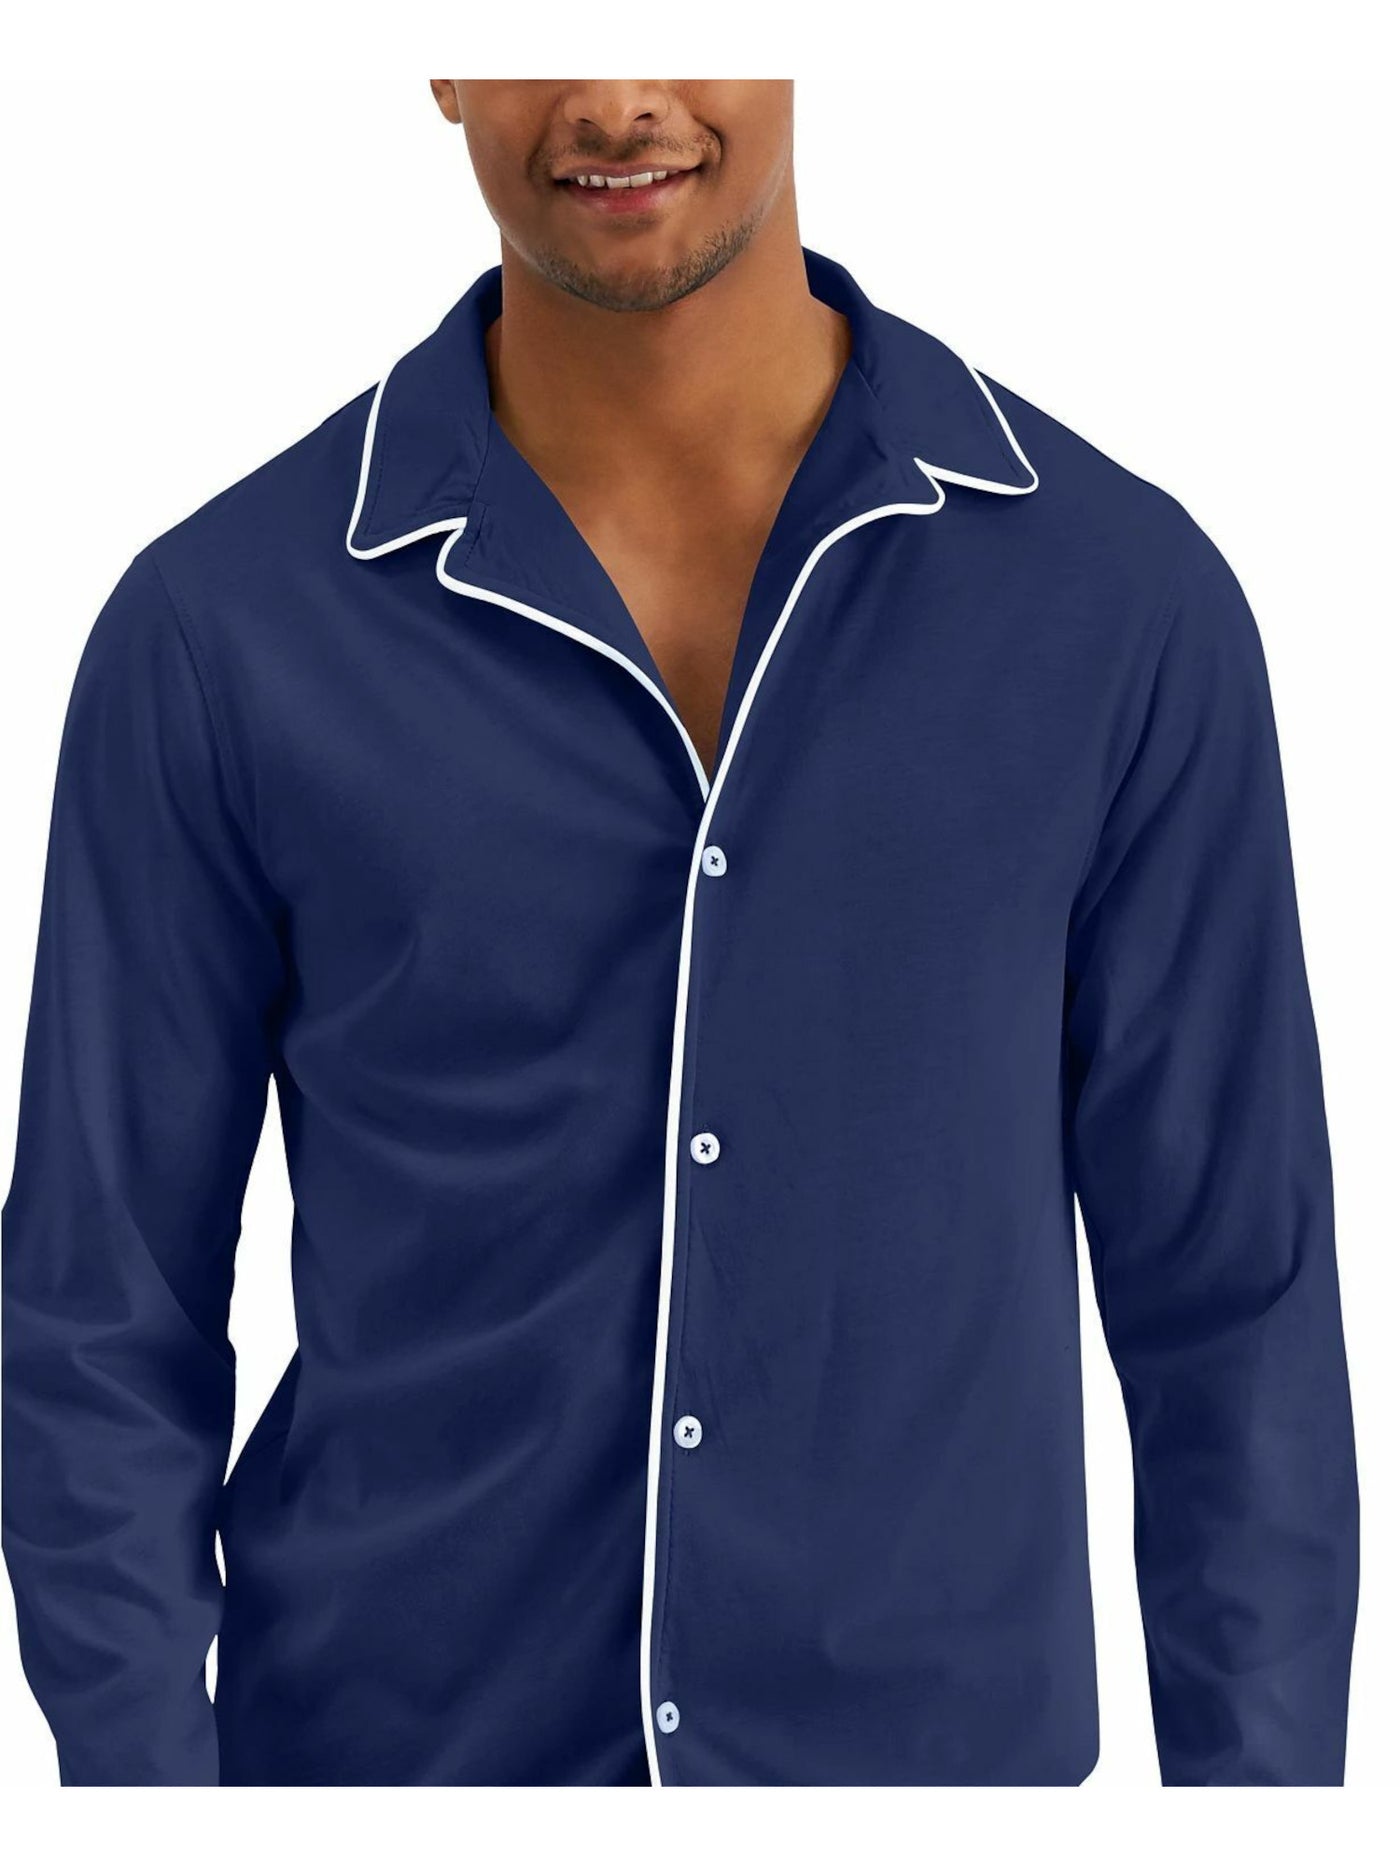 CLUBROOM Intimates Blue Cotton Blend Notched Collar Sleep Shirt Pajama Top S